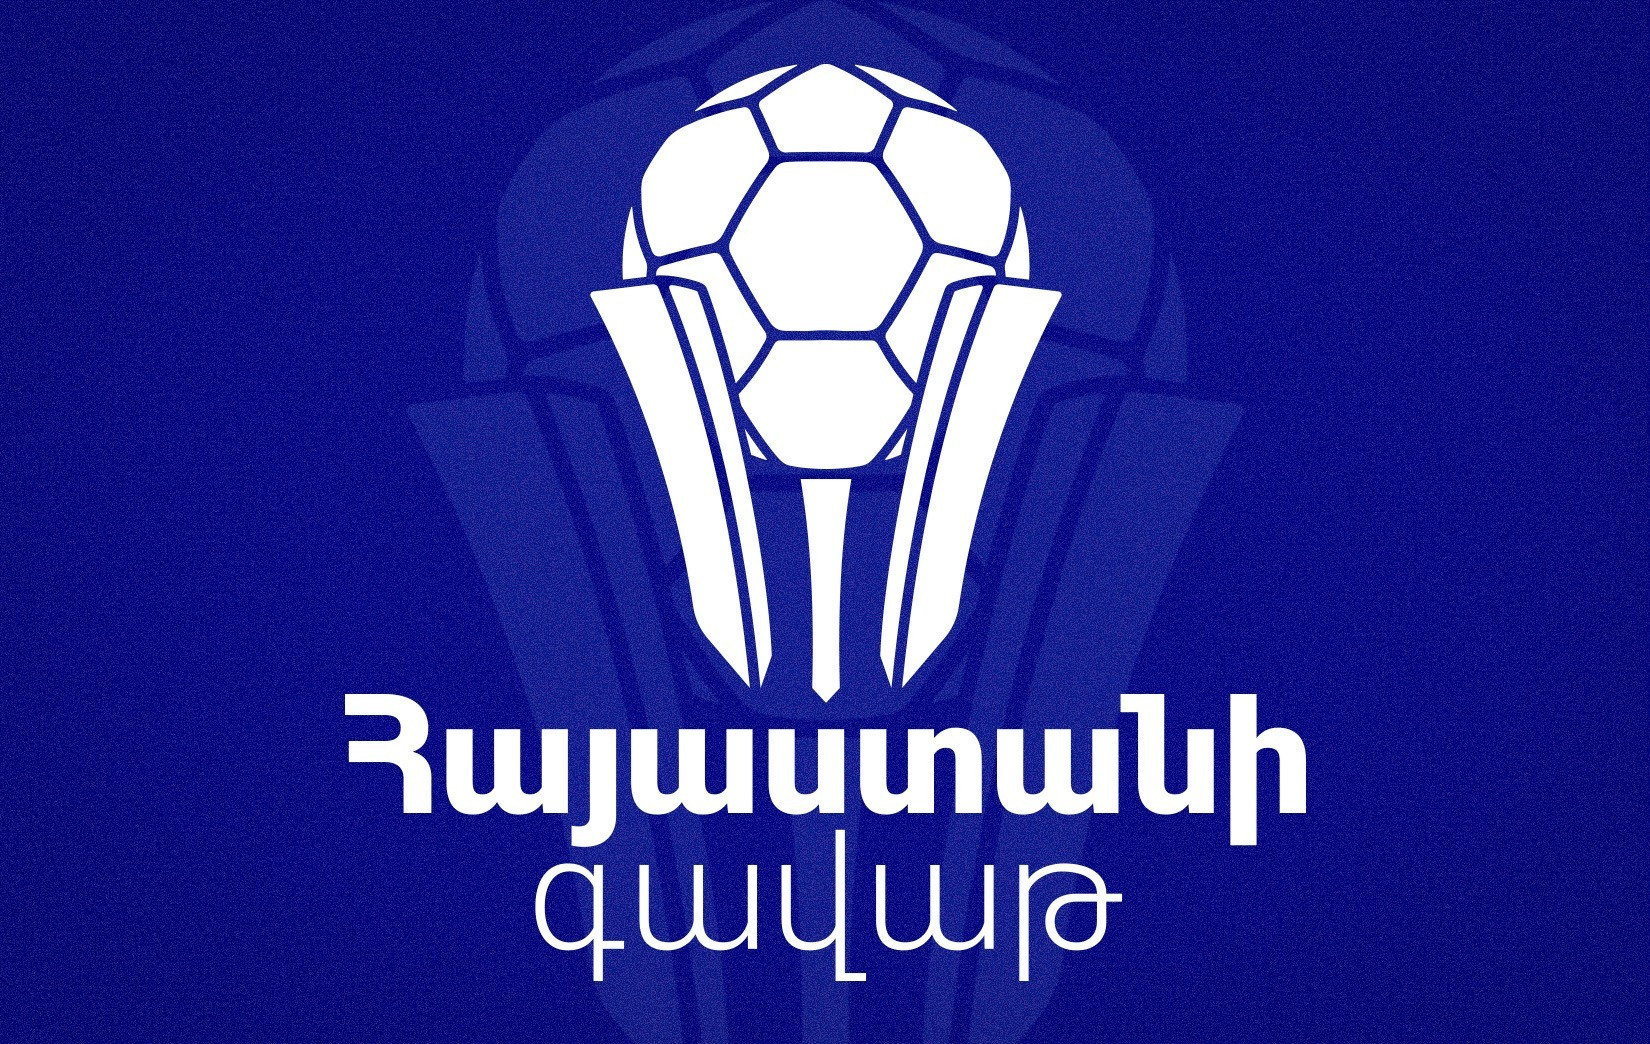 GOALLESS DRAW WITH ARARAT-ARMENIA FC